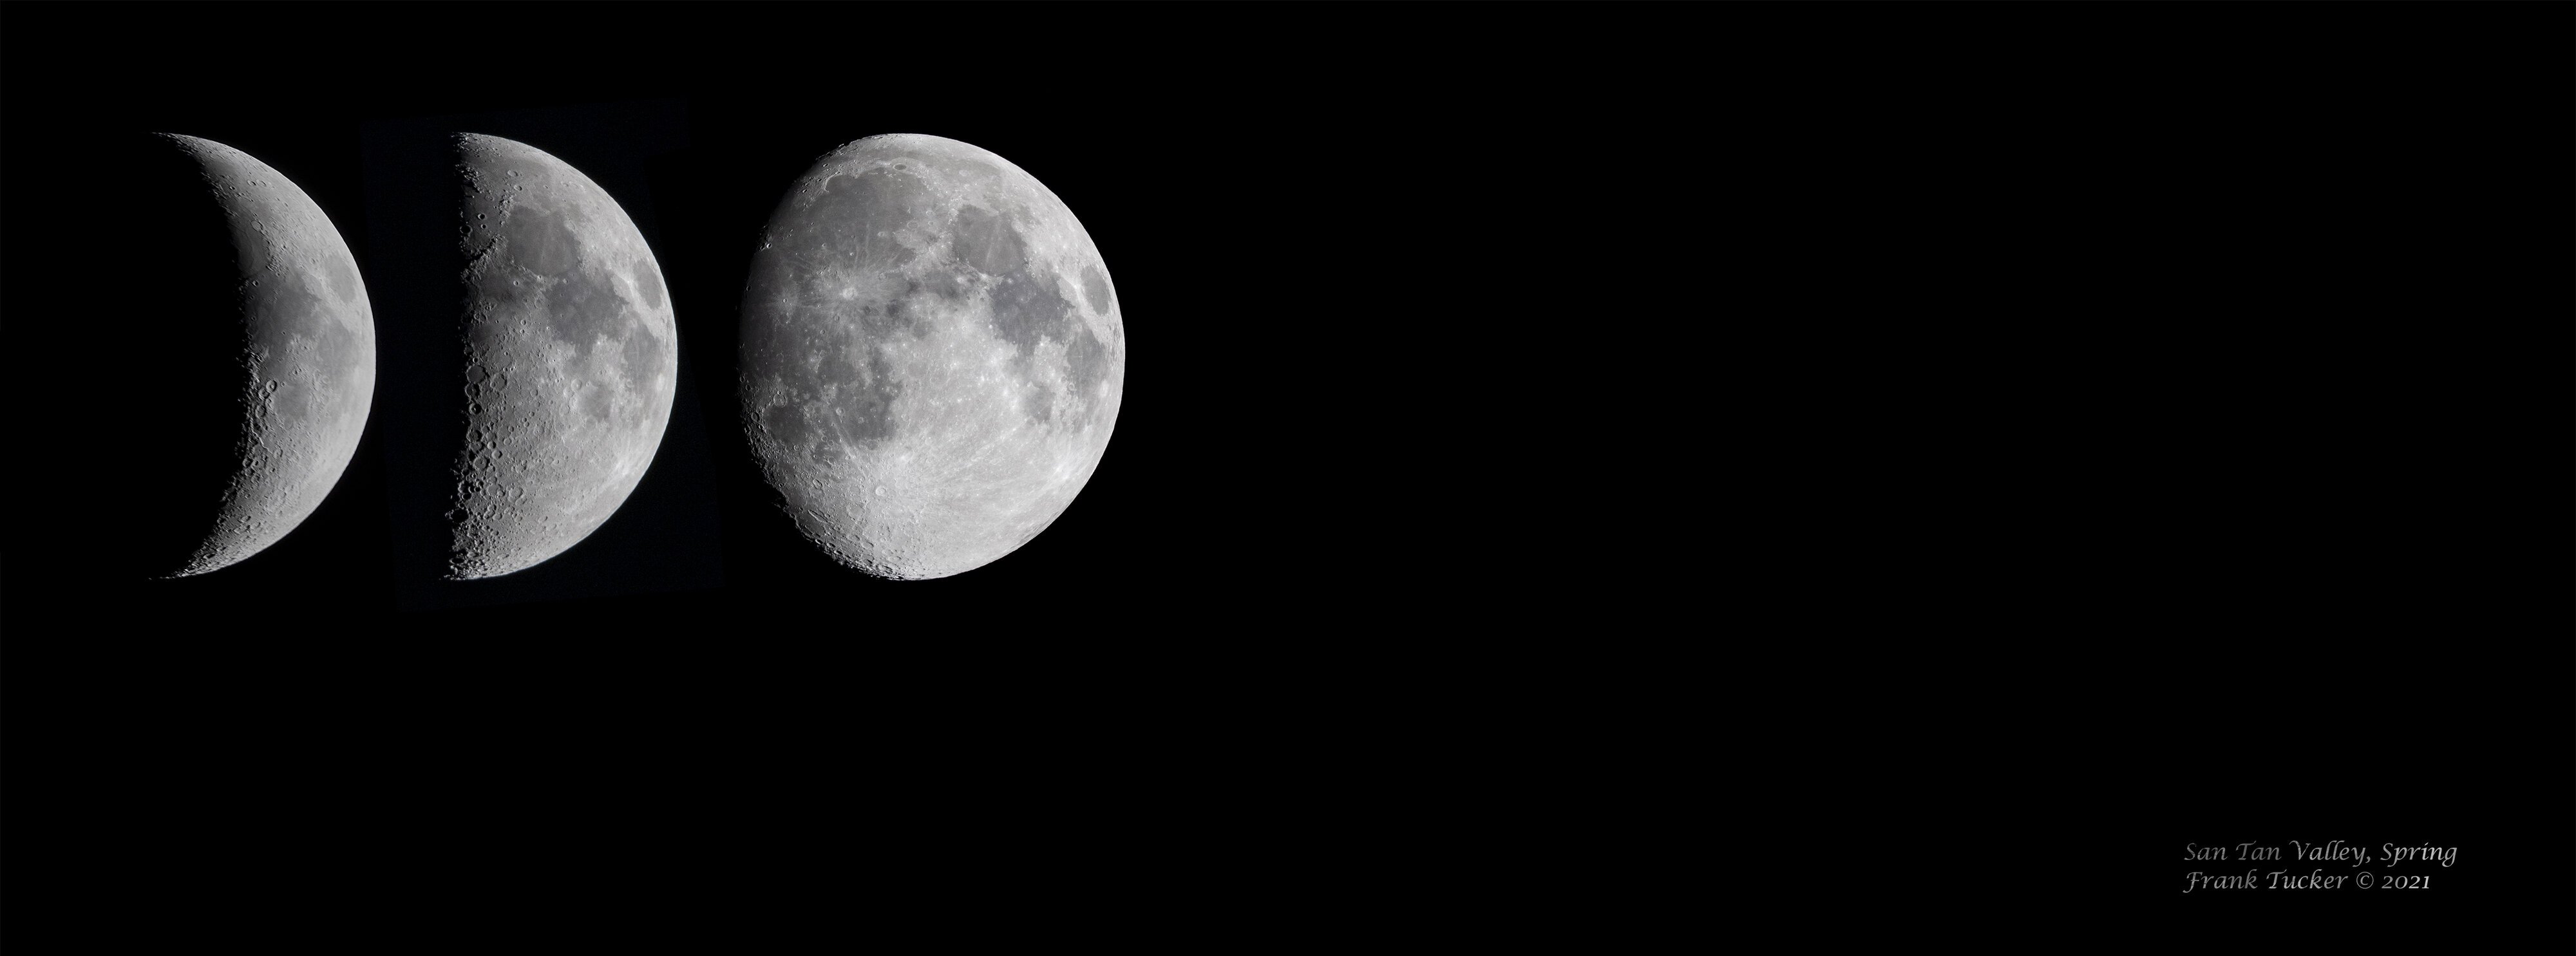 Combo Moon Composite 3 Shot for Web.jpg